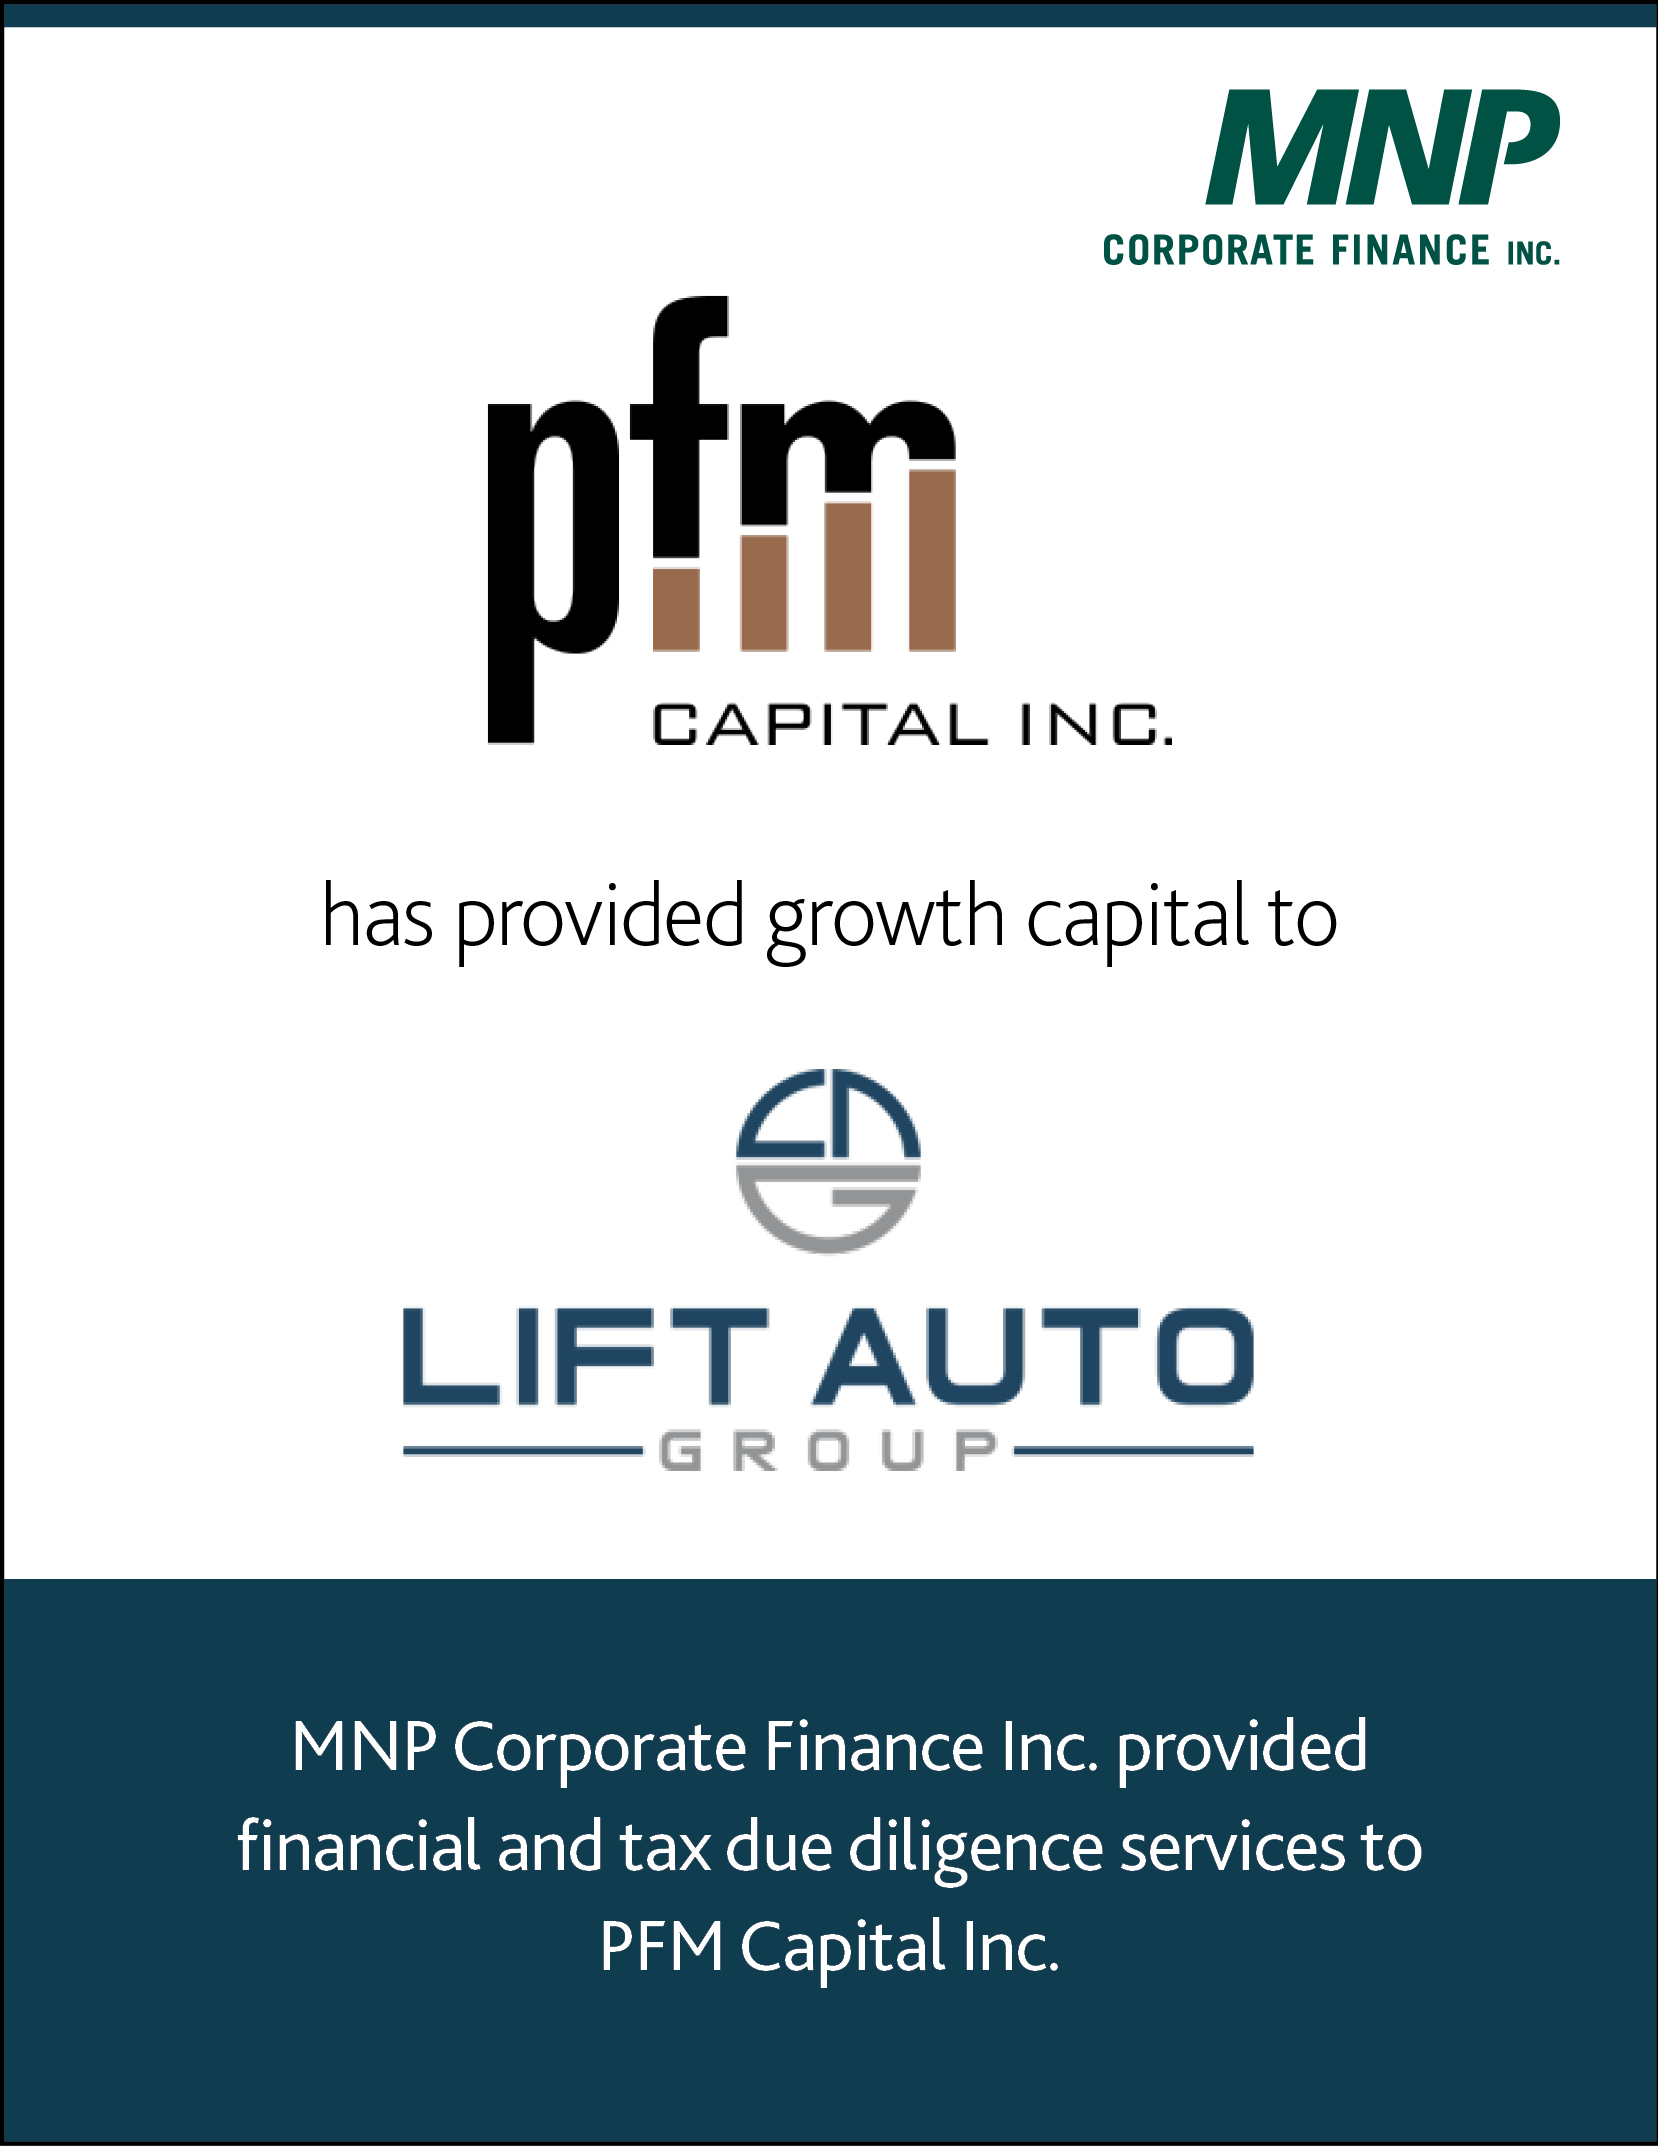 pfm capital inc has provided growth capital to Lift Auto Group